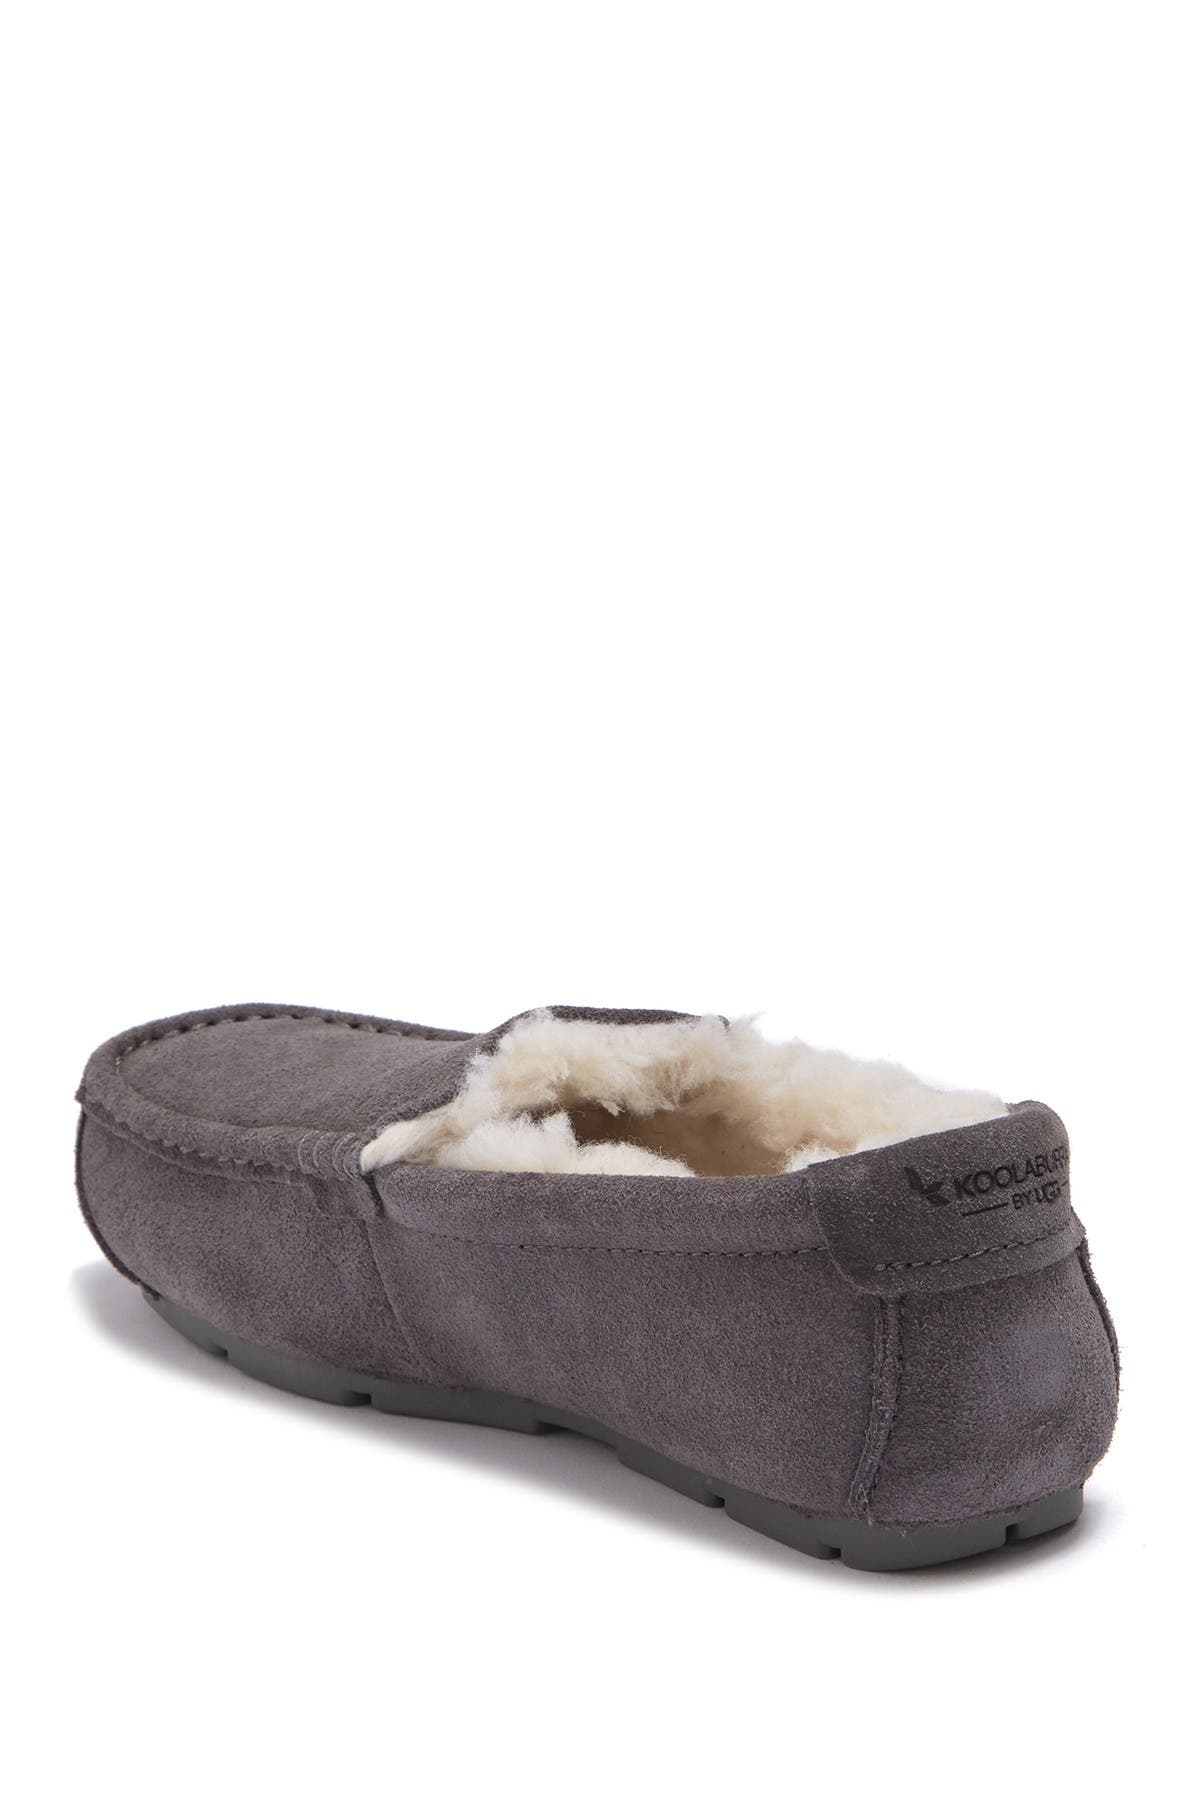 koolaburra slippers mens